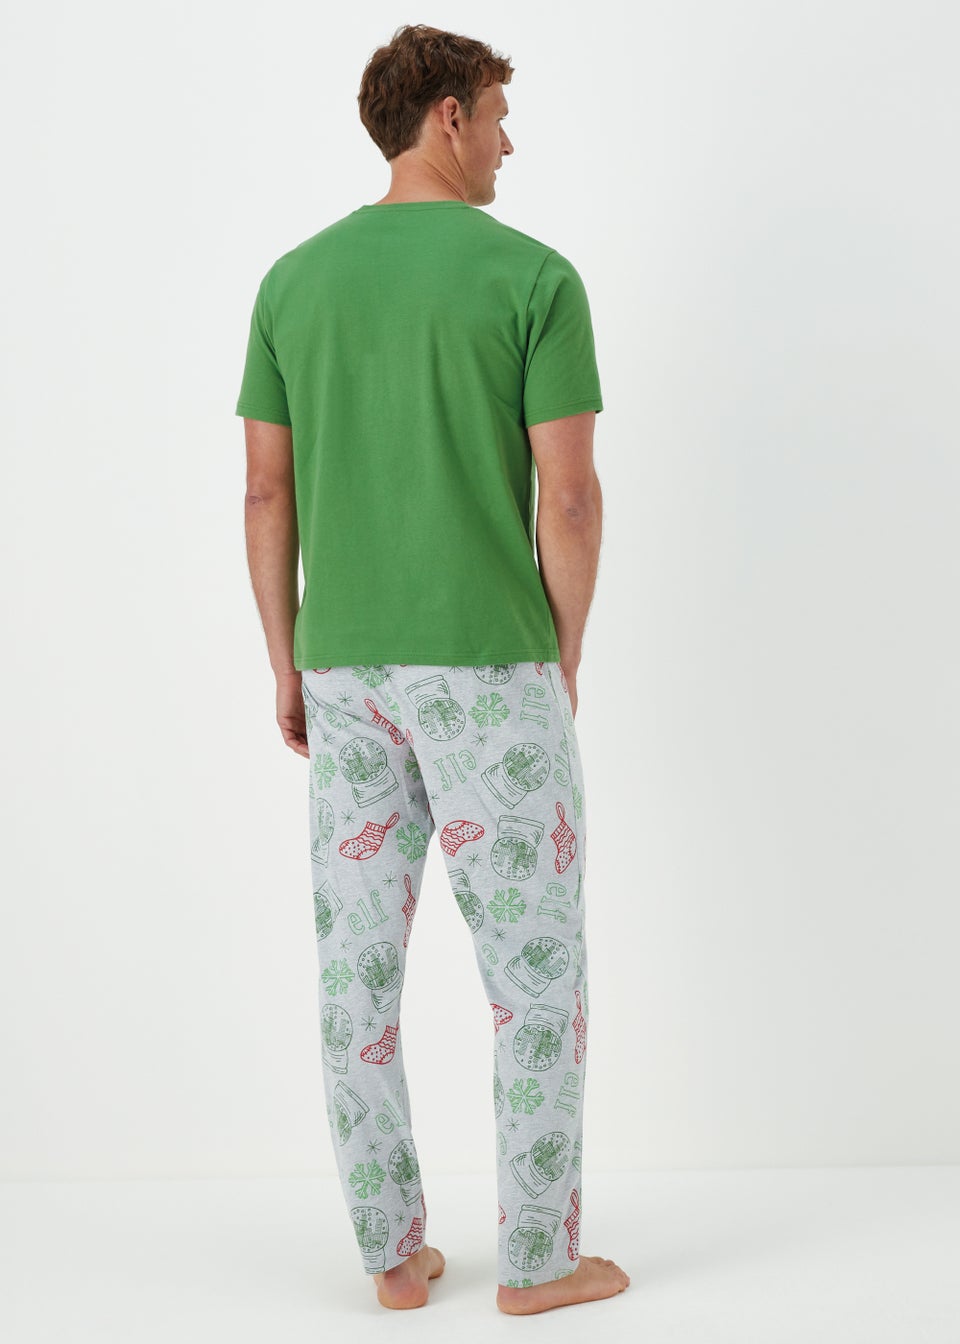 Green Christmas Elf Pyjama Set